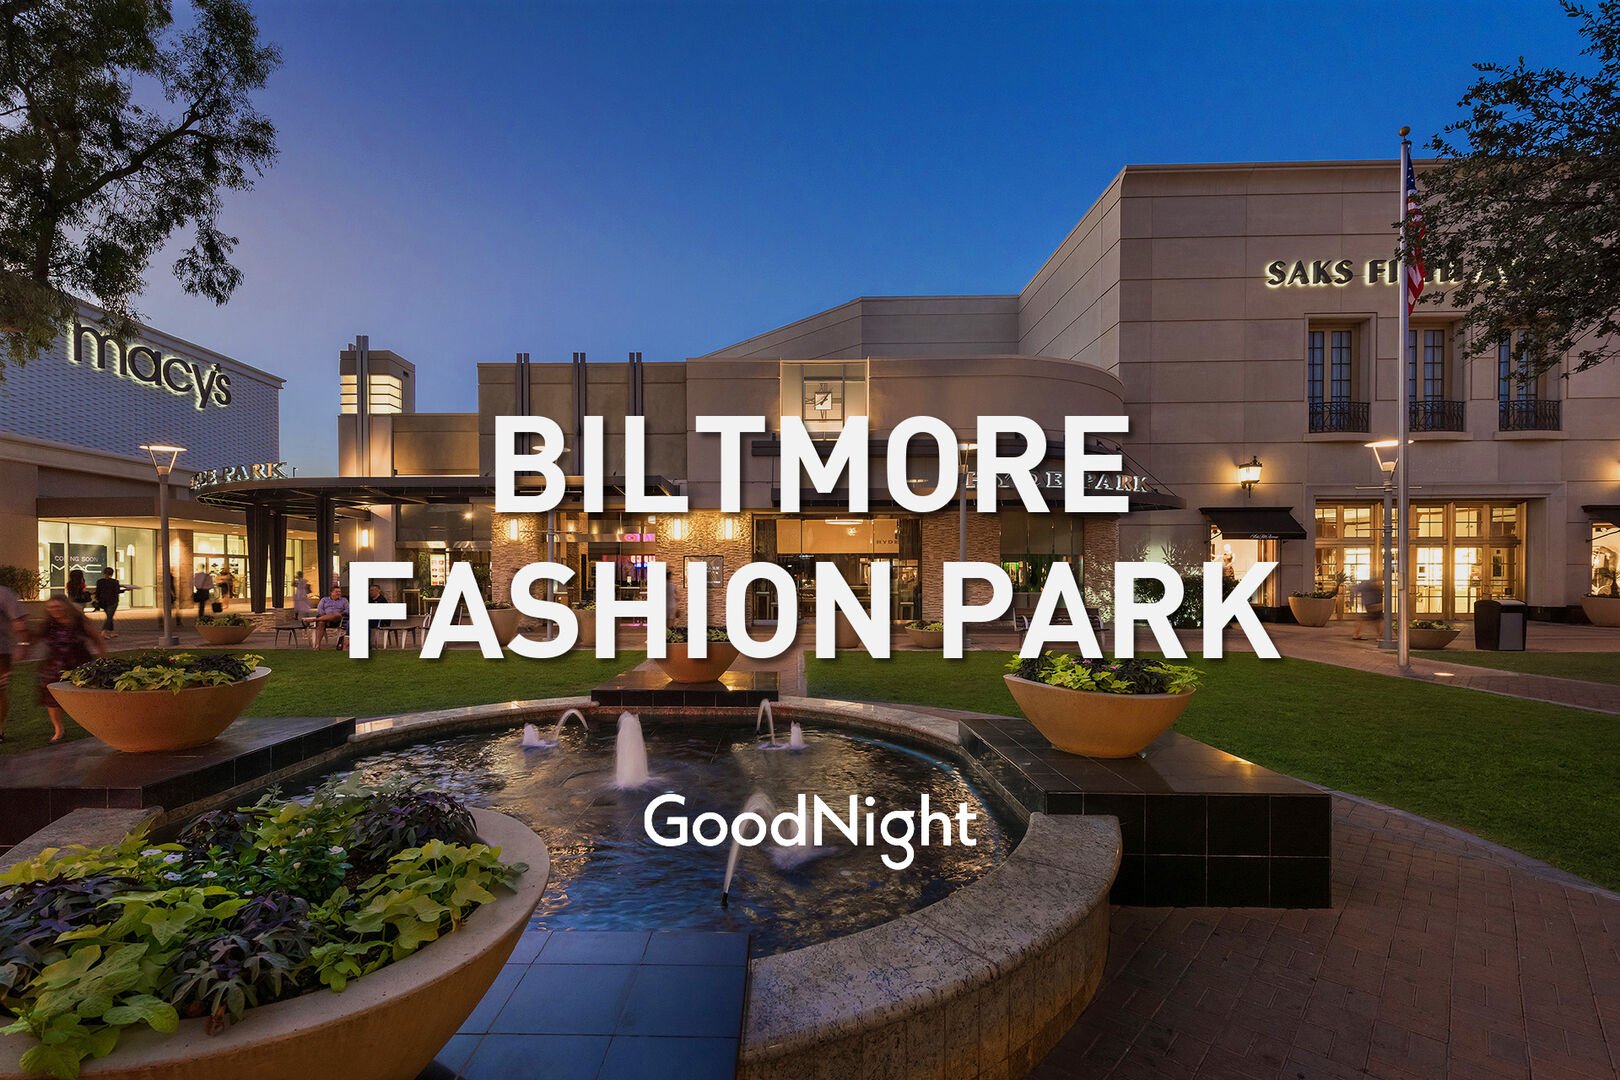 16 mins: Biltmore Fashion Park